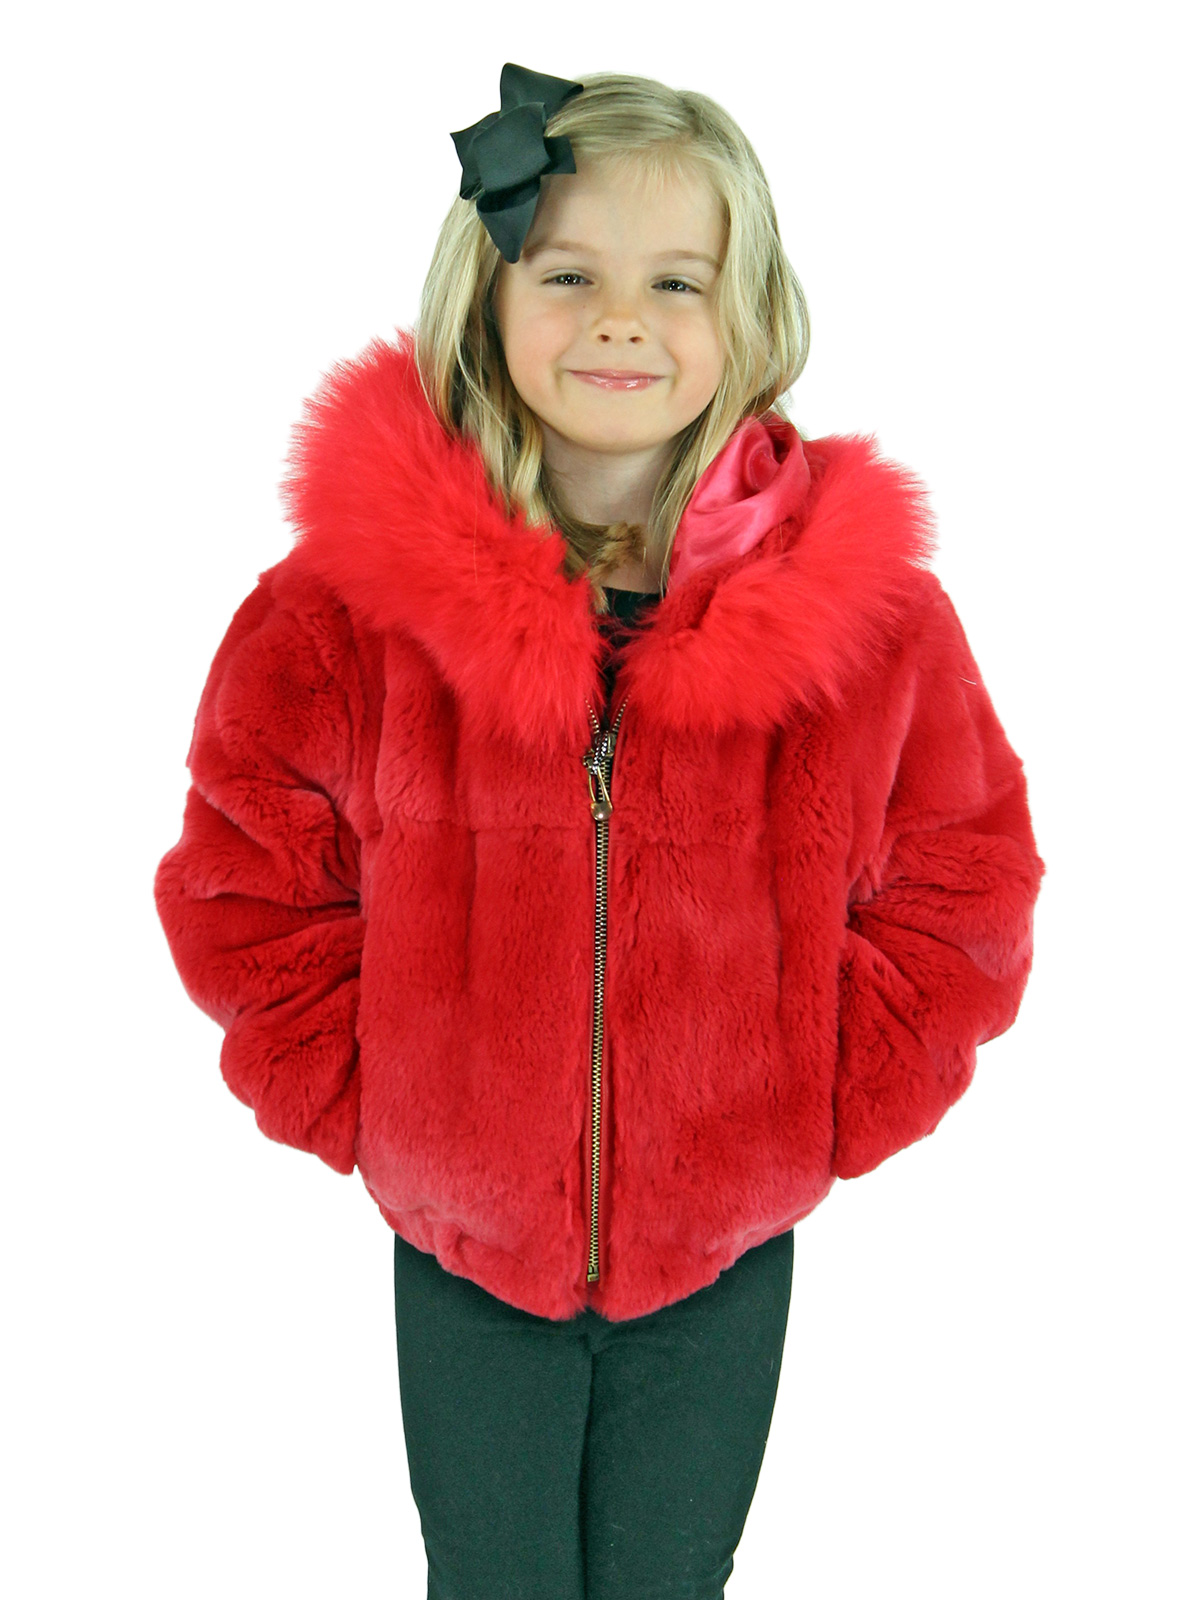 Kid's Coral Rex Rabbit Fur Jacket with Hood - Kid's Fur Jacket - Medium ...